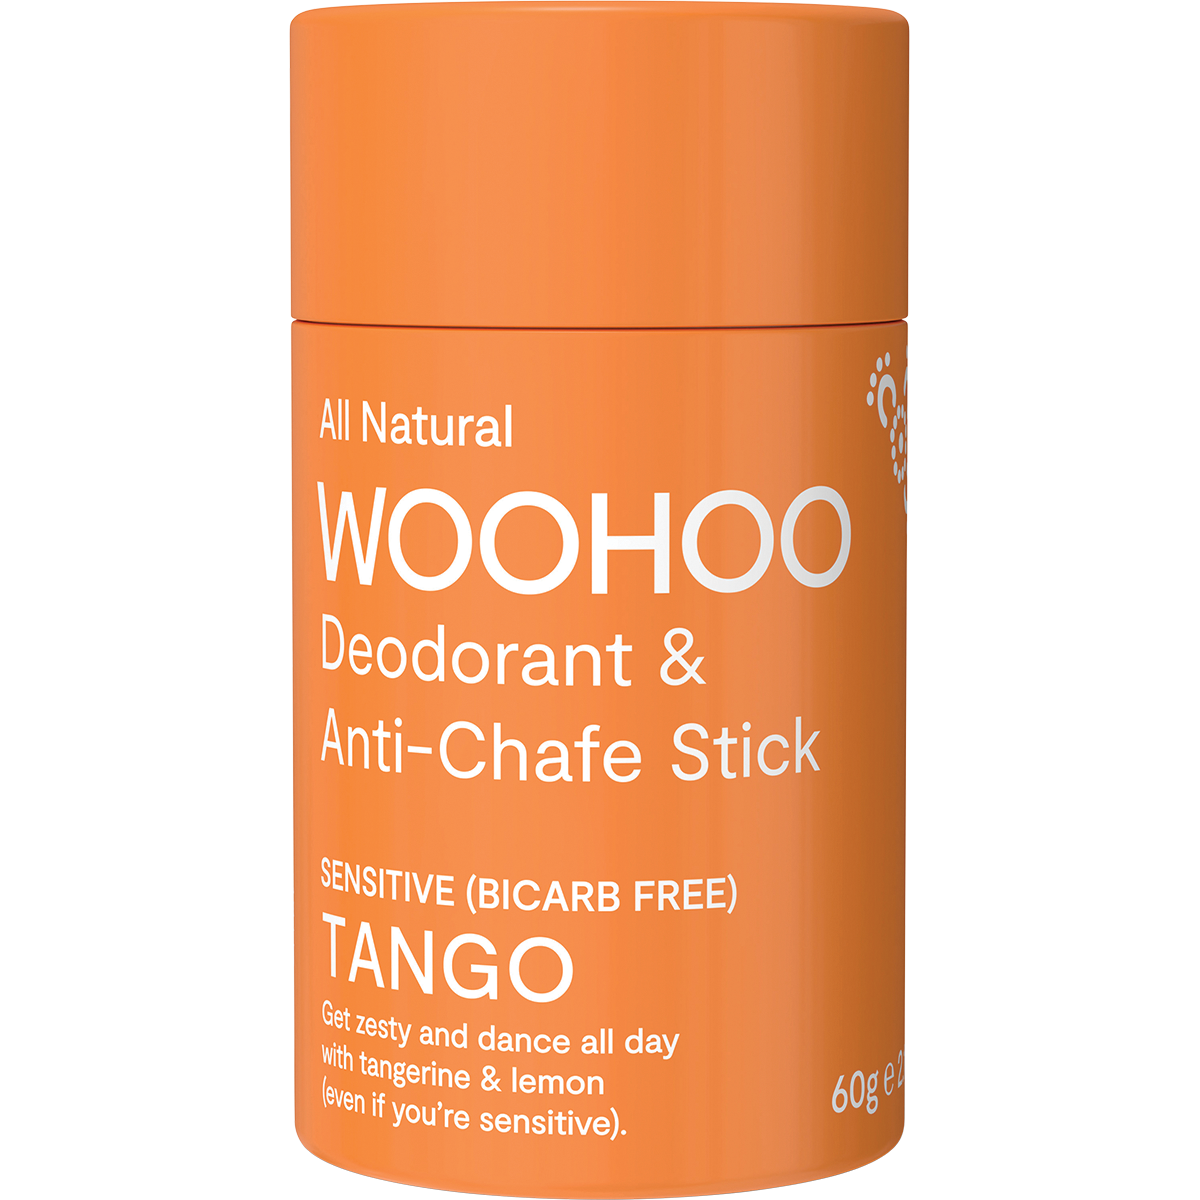 Woohoo Natural Deodorant & Anti-Chafe Stick Tango (Sensitive Bicarb Free) 60g